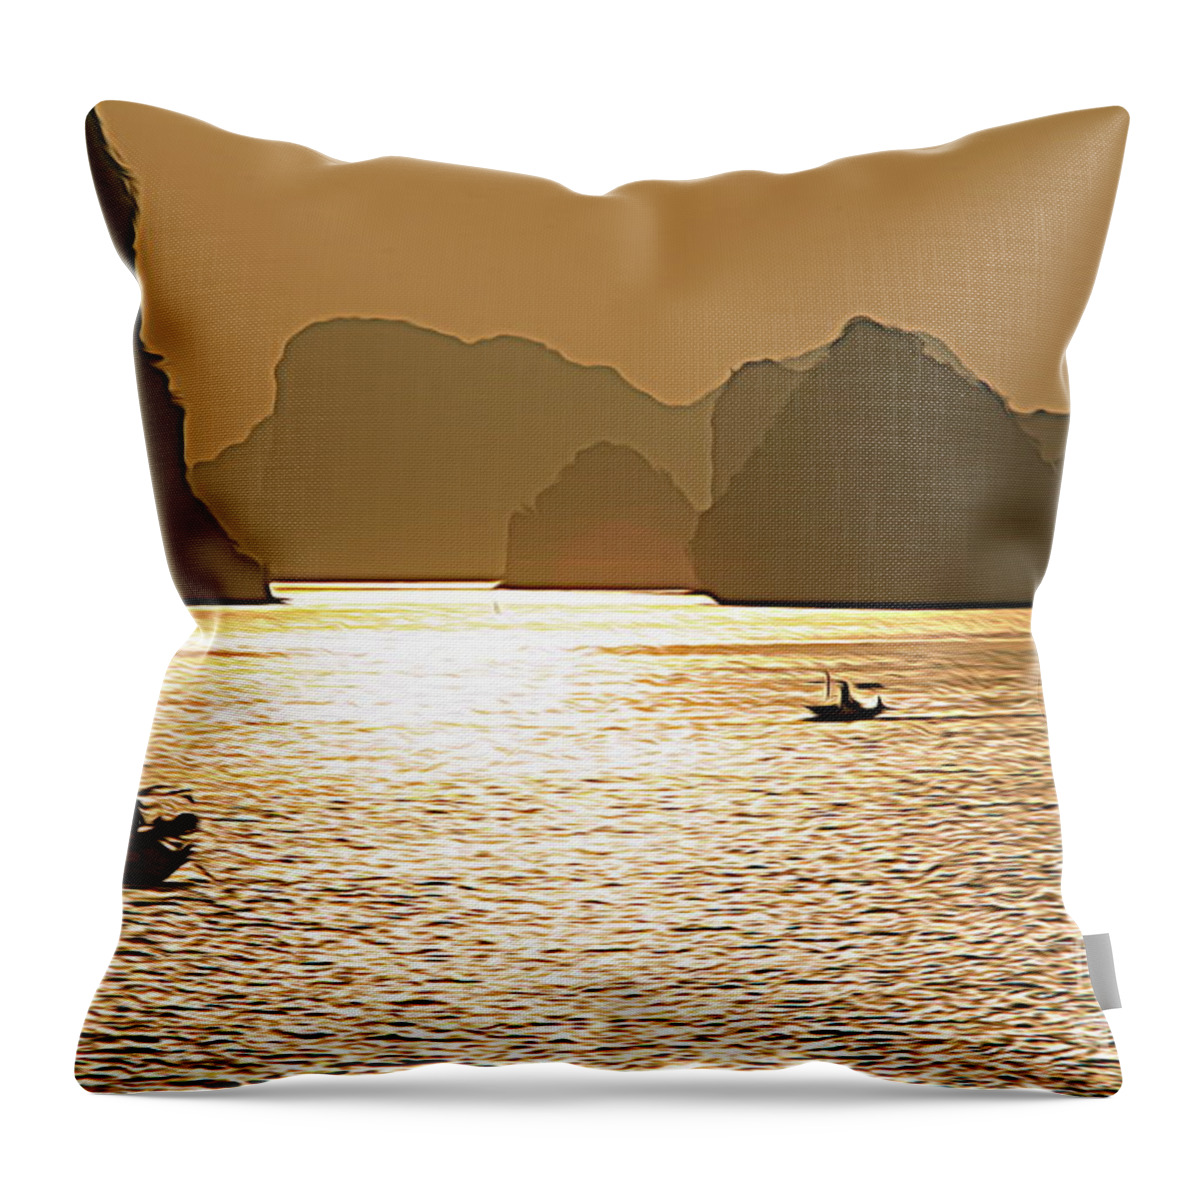 Vietnam Throw Pillow featuring the photograph Ha Long Bay Sunset by Chuck Kuhn